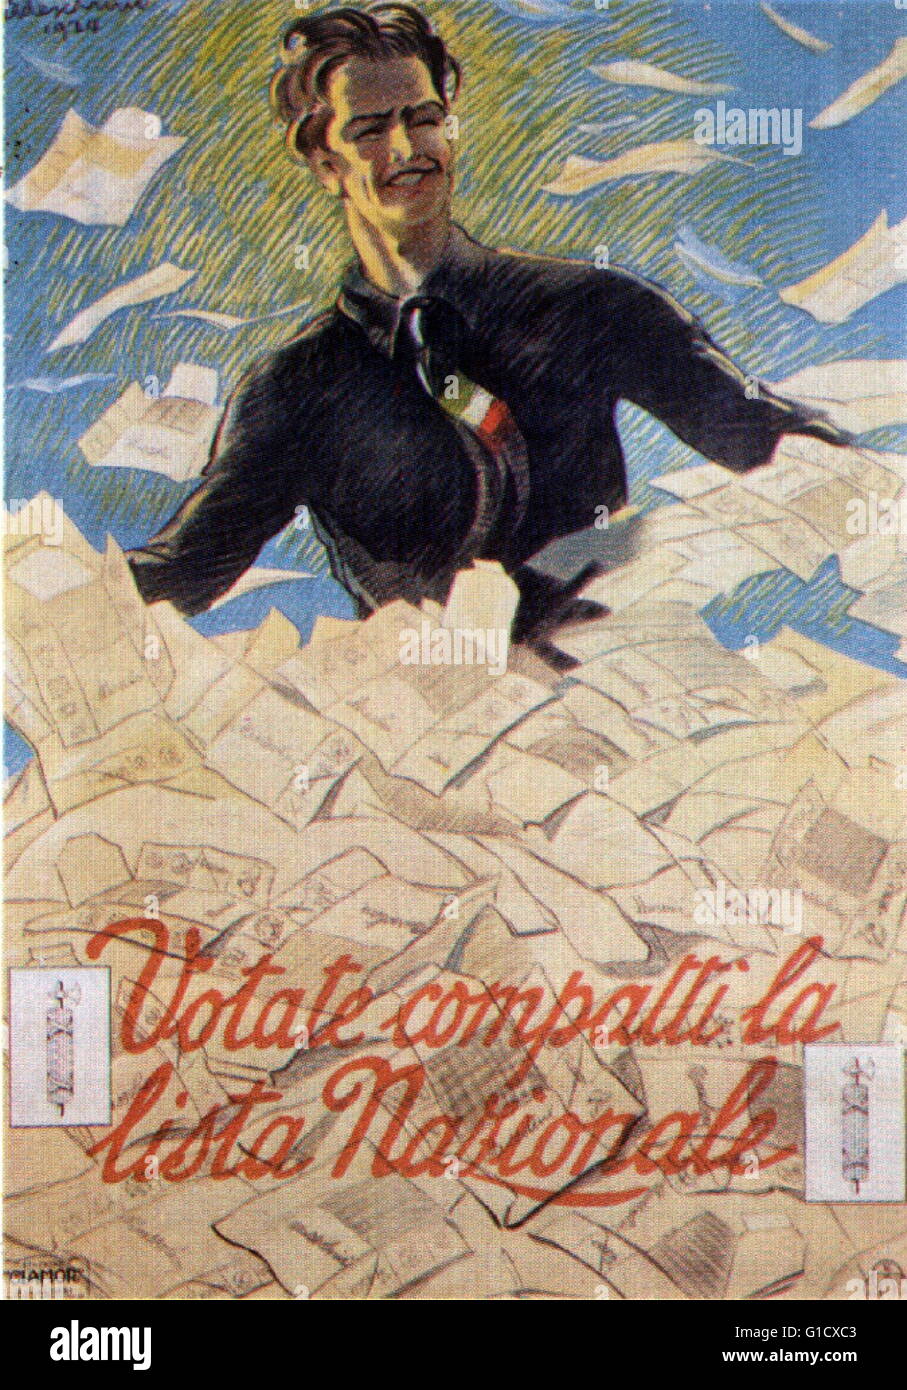 Italian Fascist Propaganda poster. Dated 20th Century Stock Photo - Alamy